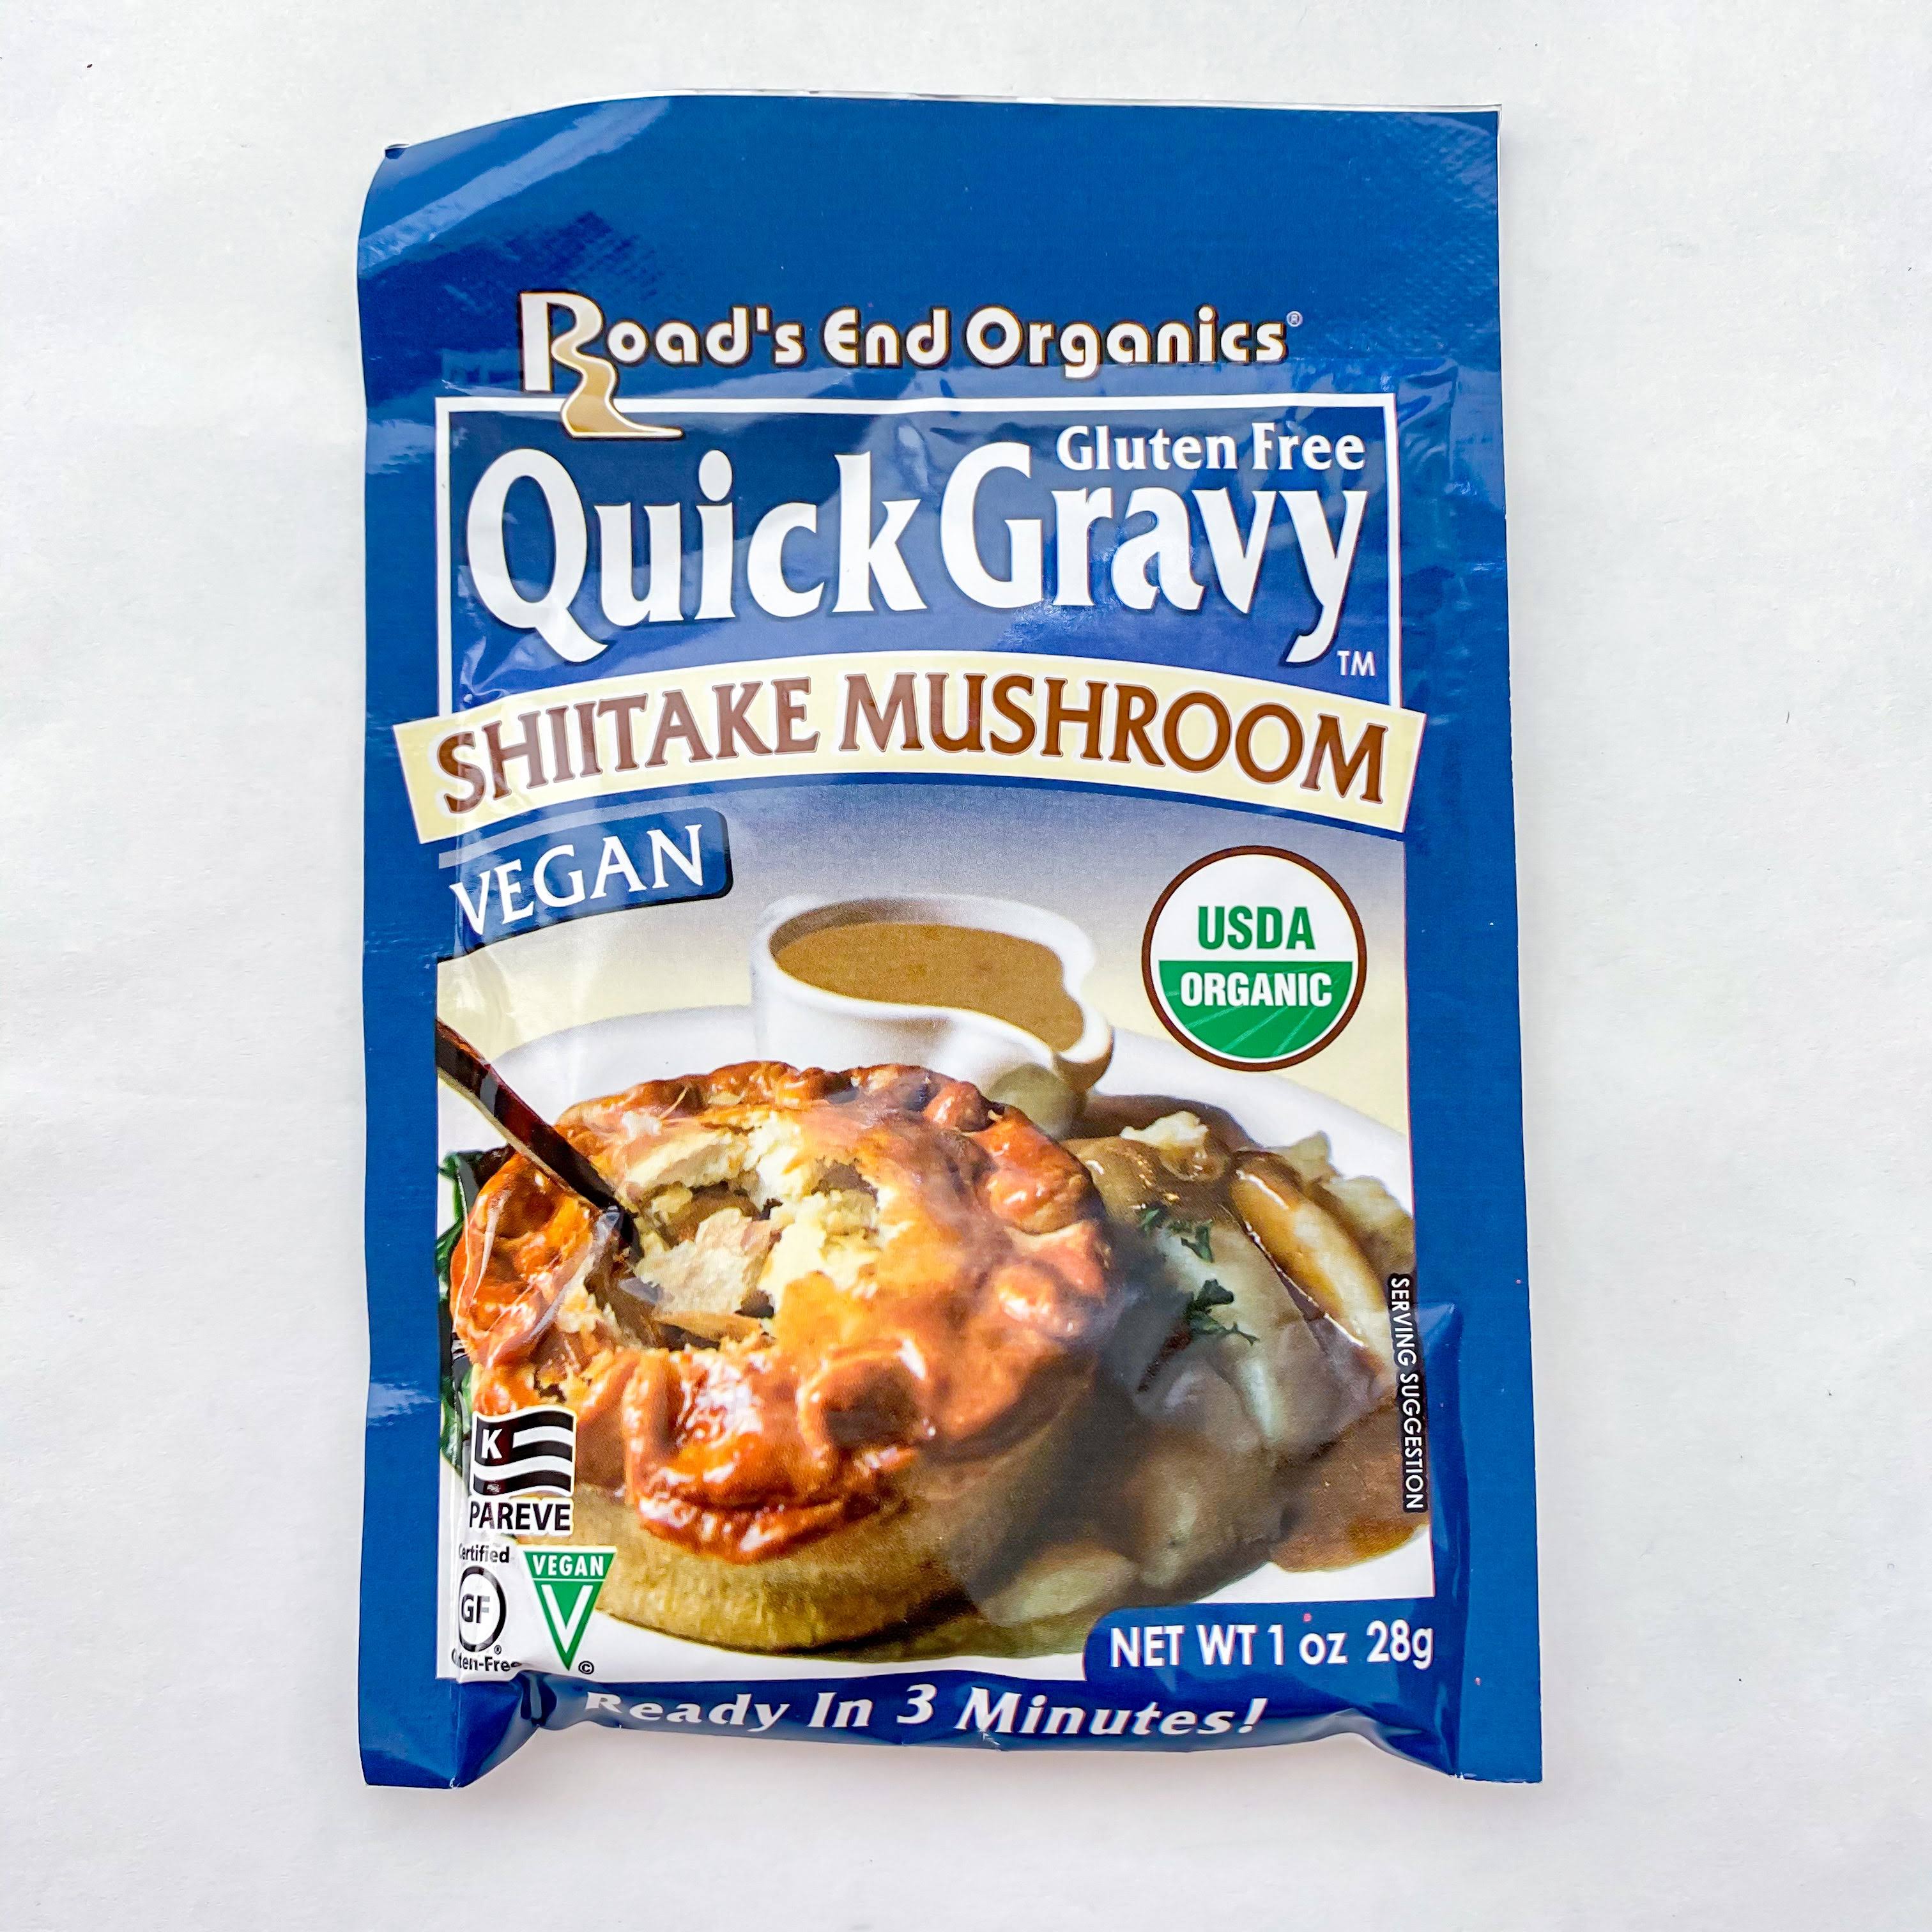 Road's End Organics Gluten Free Gravy Mix - Shiitake Mushroom, 1oz